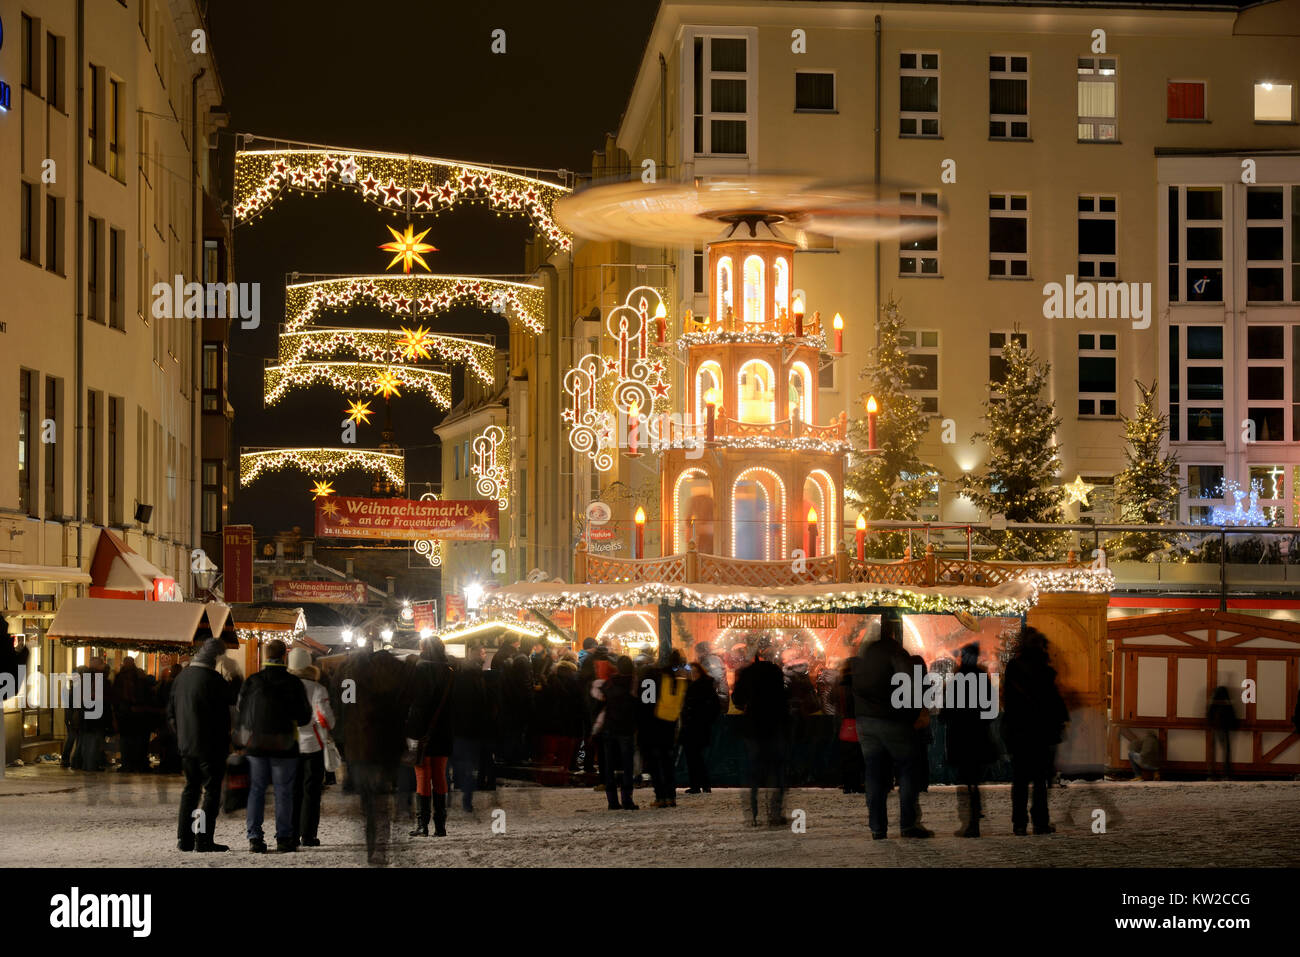 A Dresda, Fiera di Natale coin lane nella chiesa di Nostra Signora, Weihnachtsmarkt Münzgasse an der Frauenkirche Foto Stock